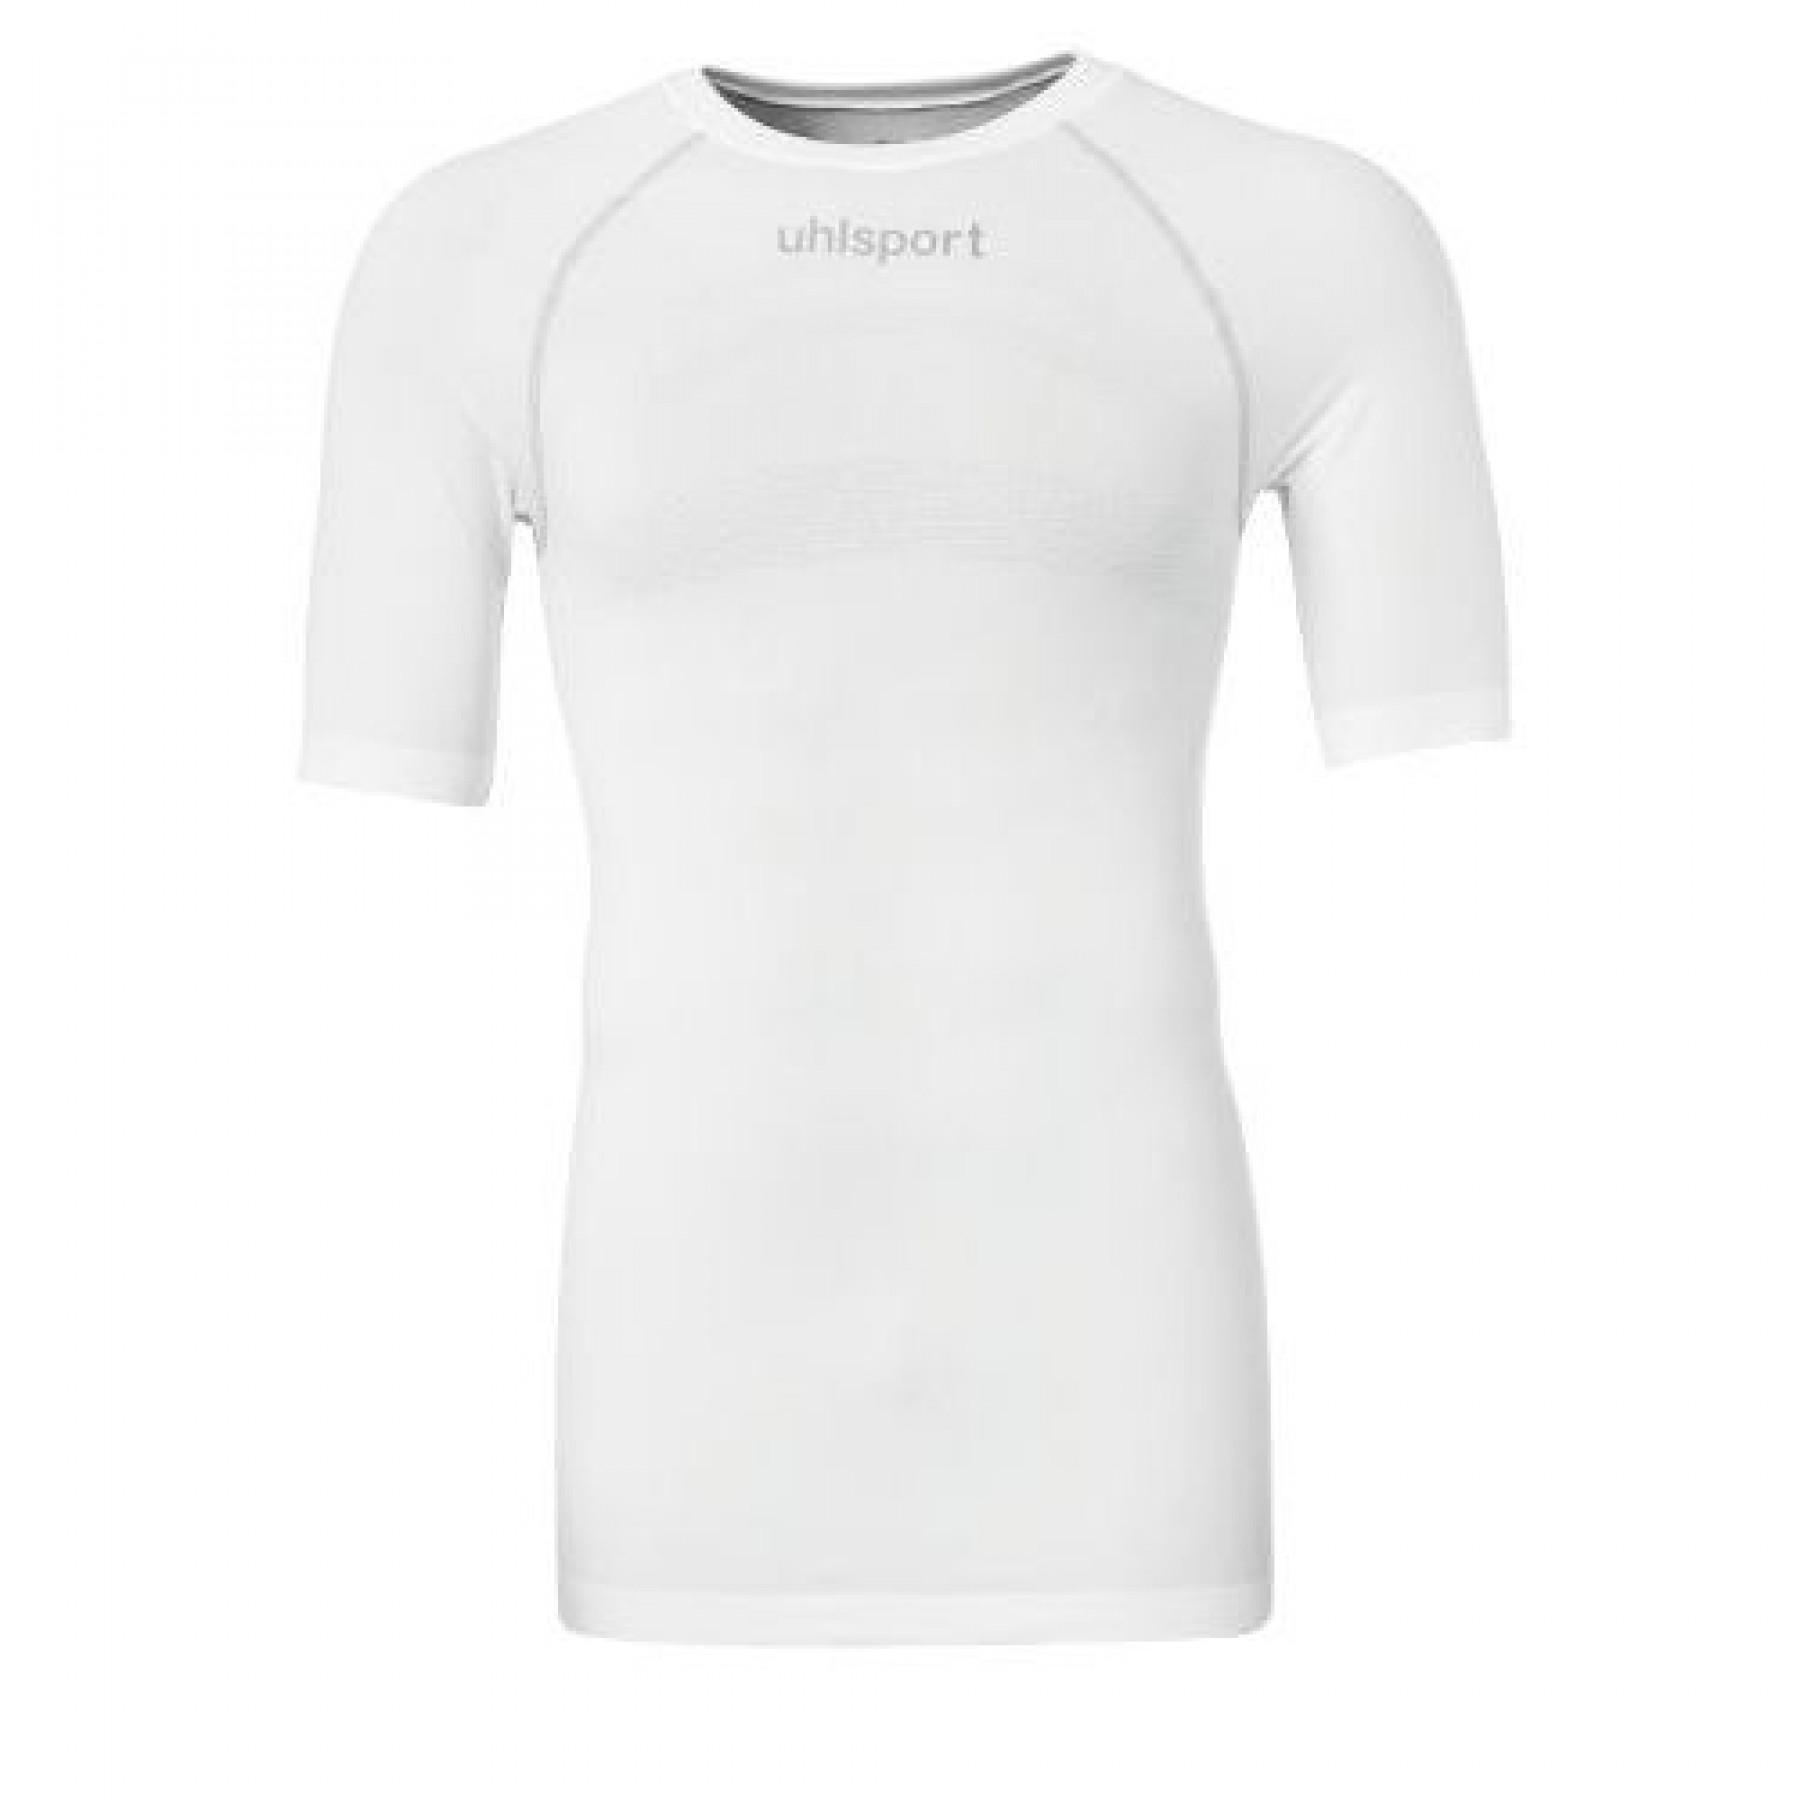 Kurzarm-Unterhemd Uhlsport Distinction Pro Thermoshirt